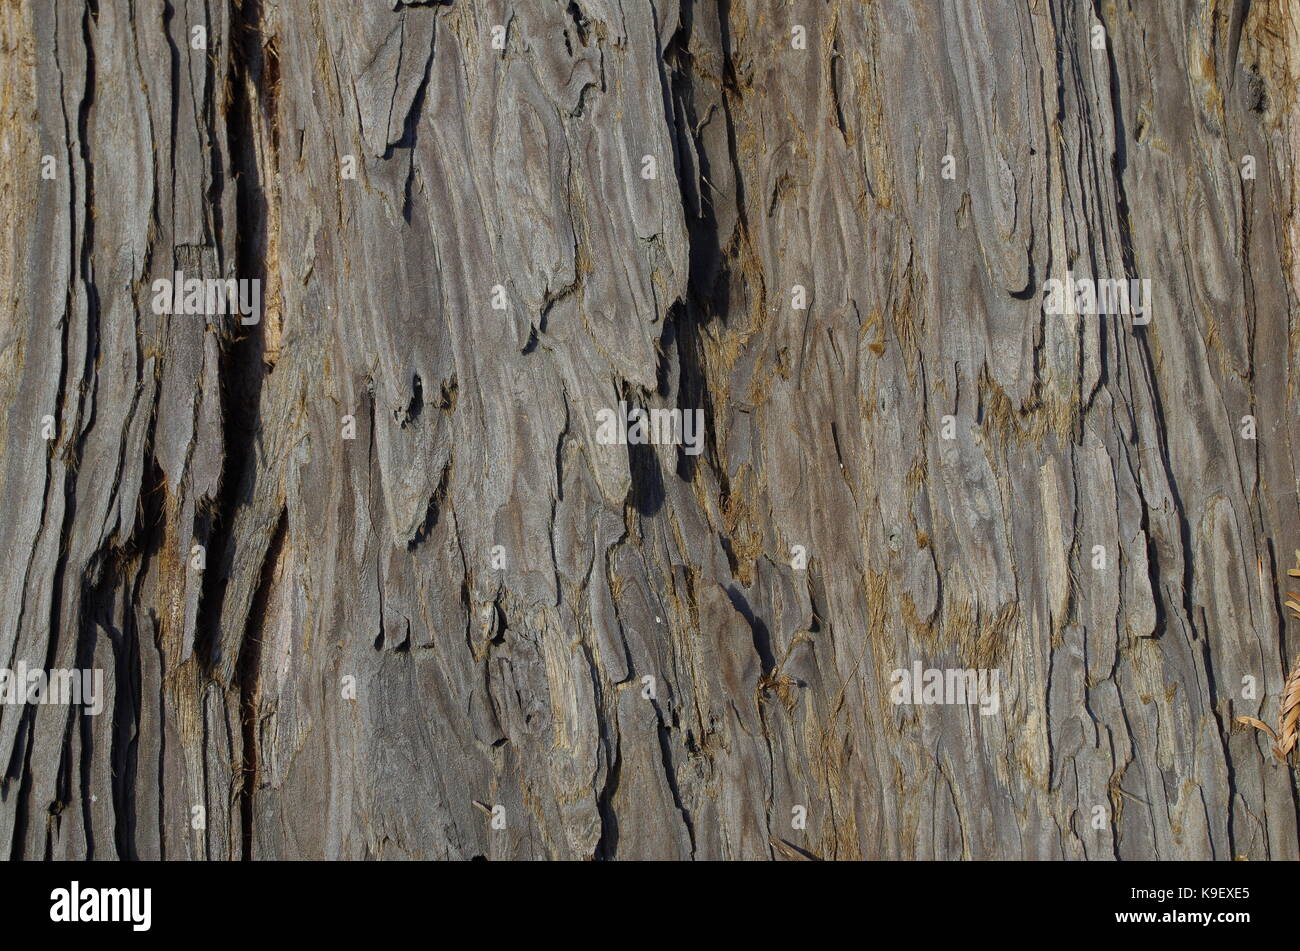 Spanish fir raw wood texture. Abies pinsapo. Castelo de Vide, Portugal Stock Photo